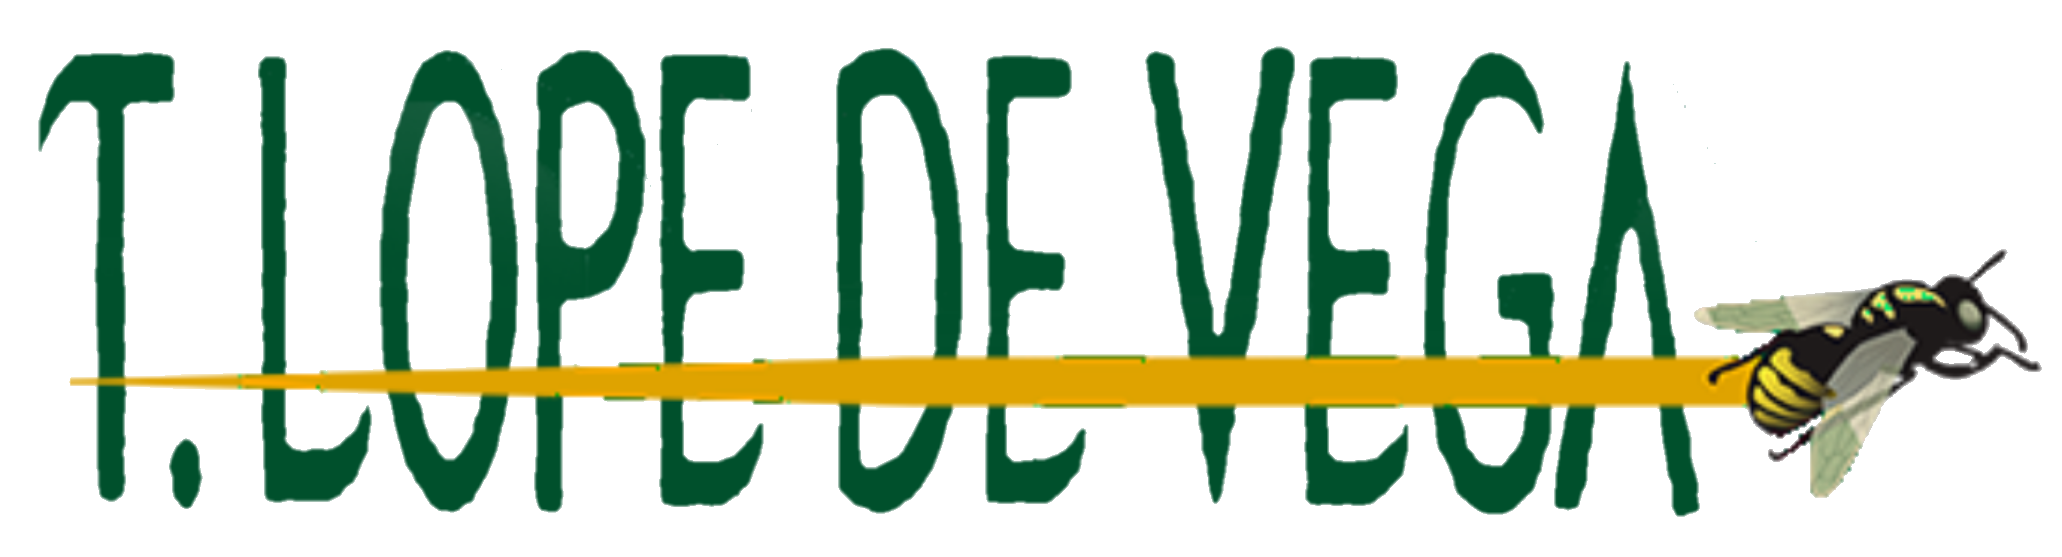 Logo tlopedevega